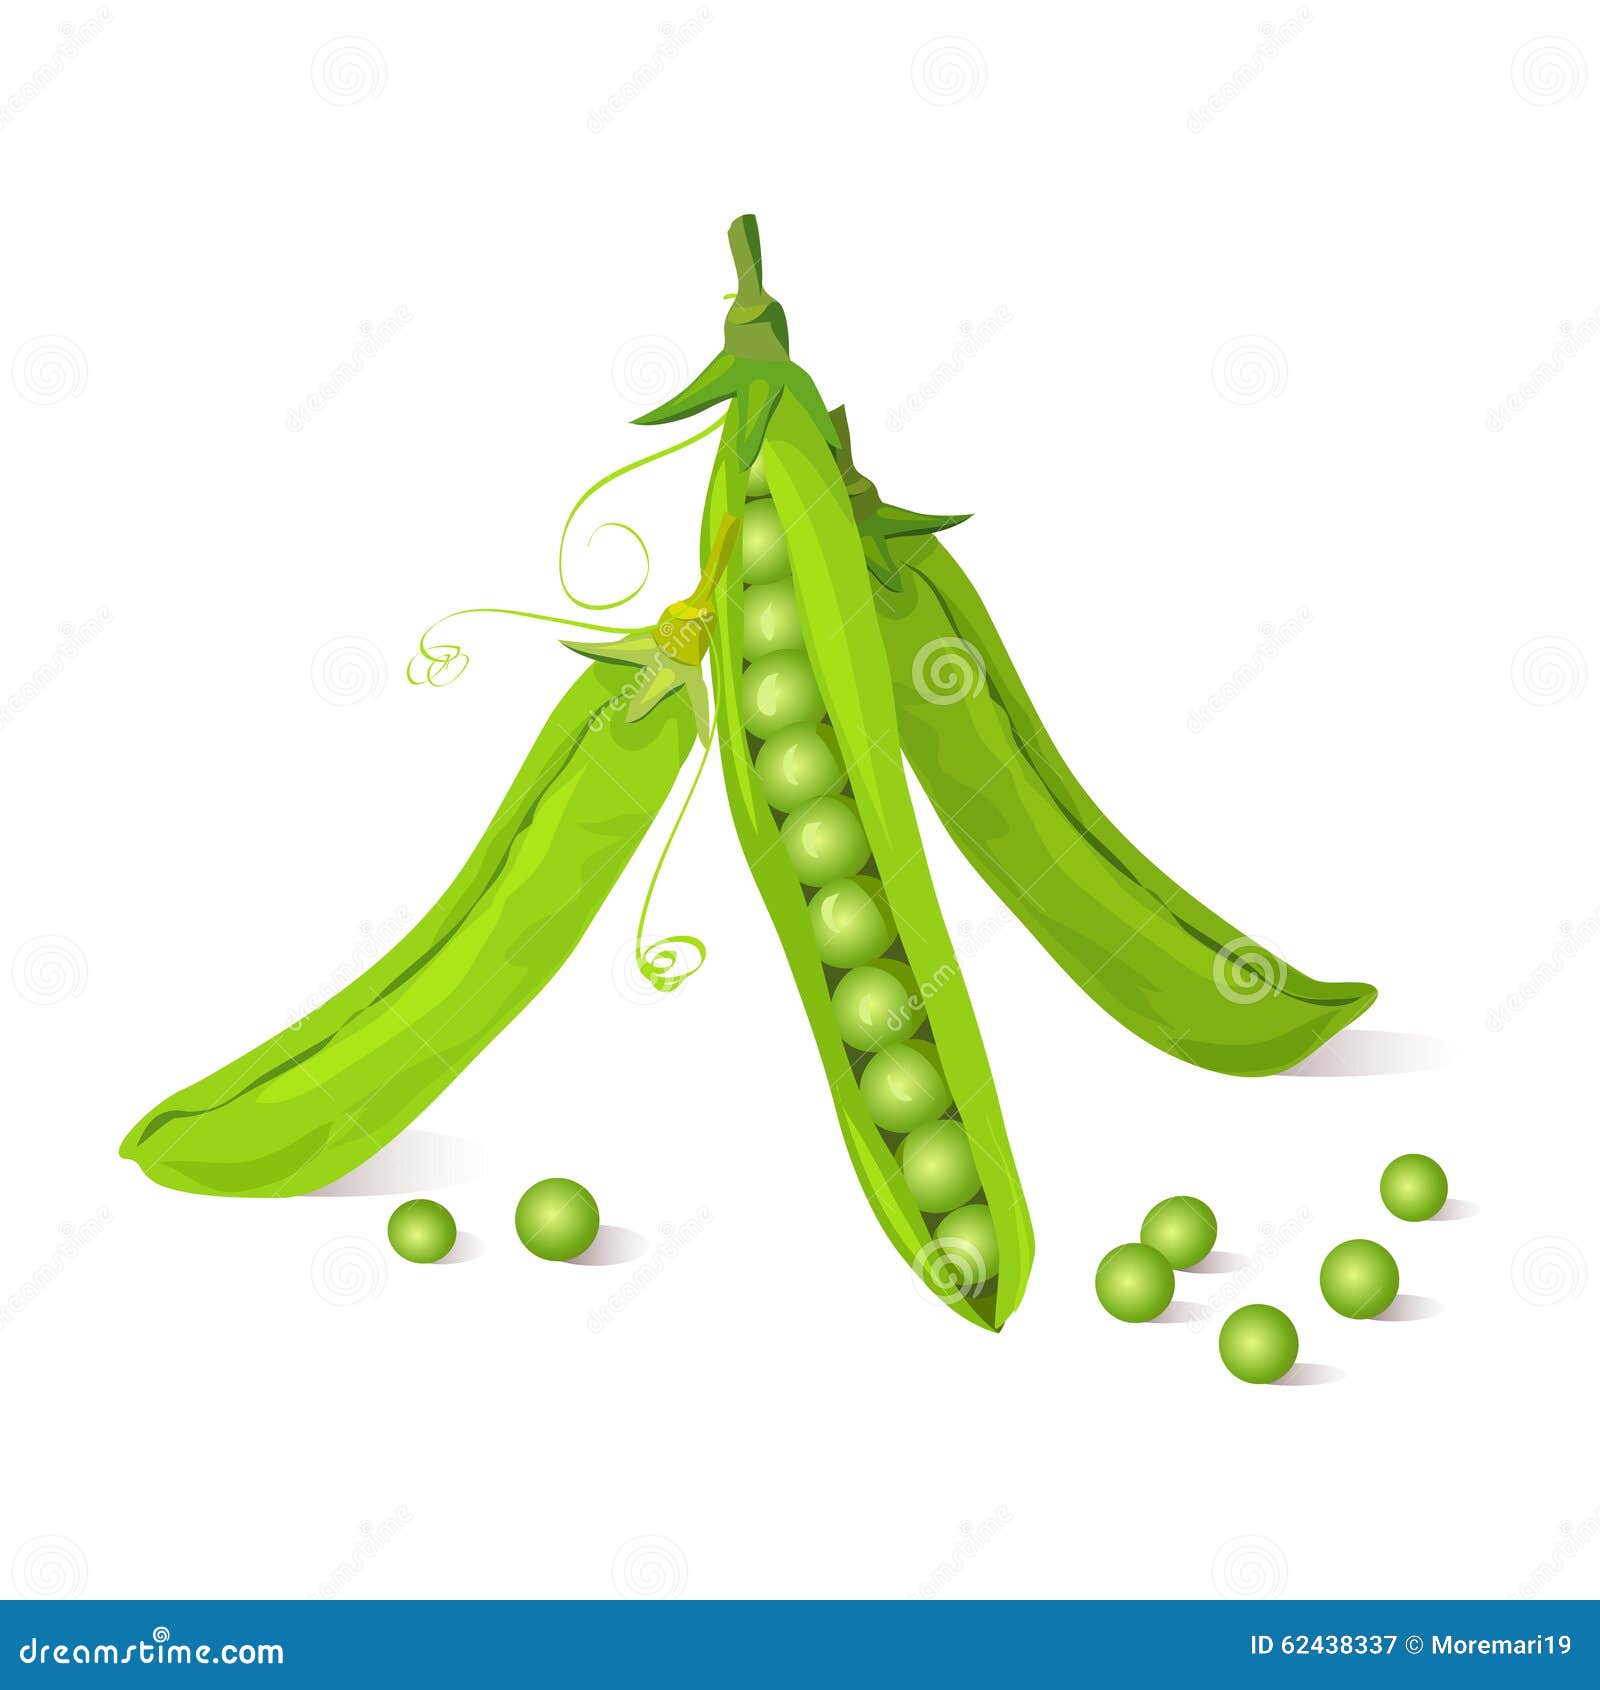 green pea pods